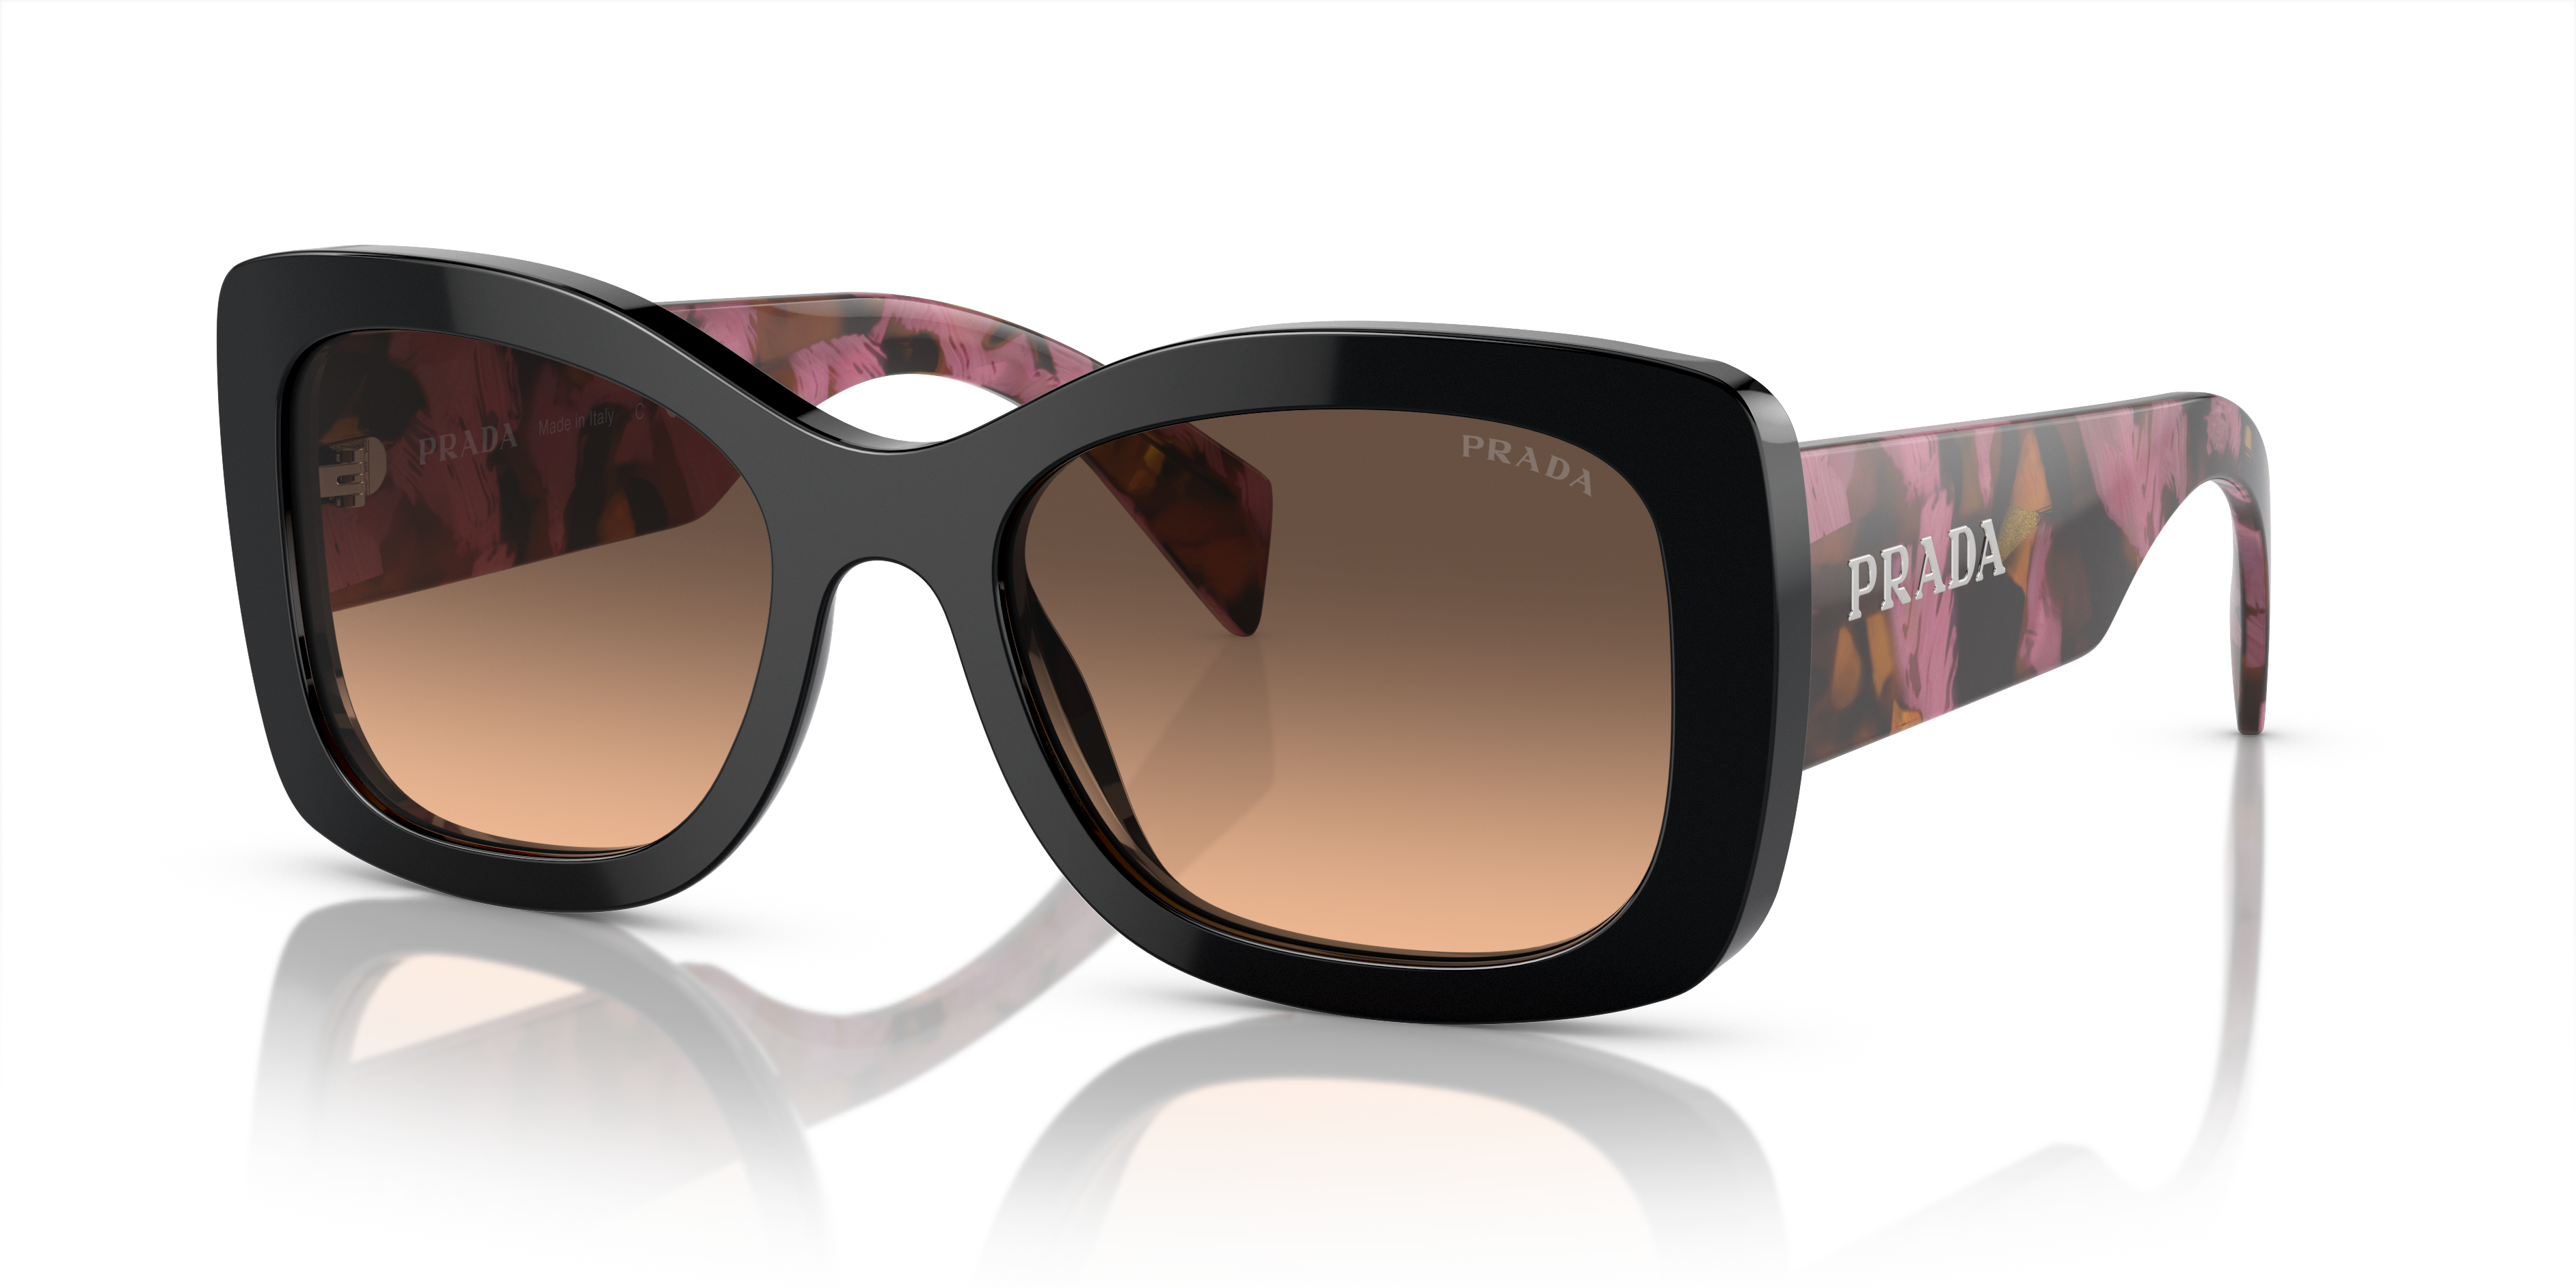 [products.image.angle_left01] Prada PR A08S Sunglasses